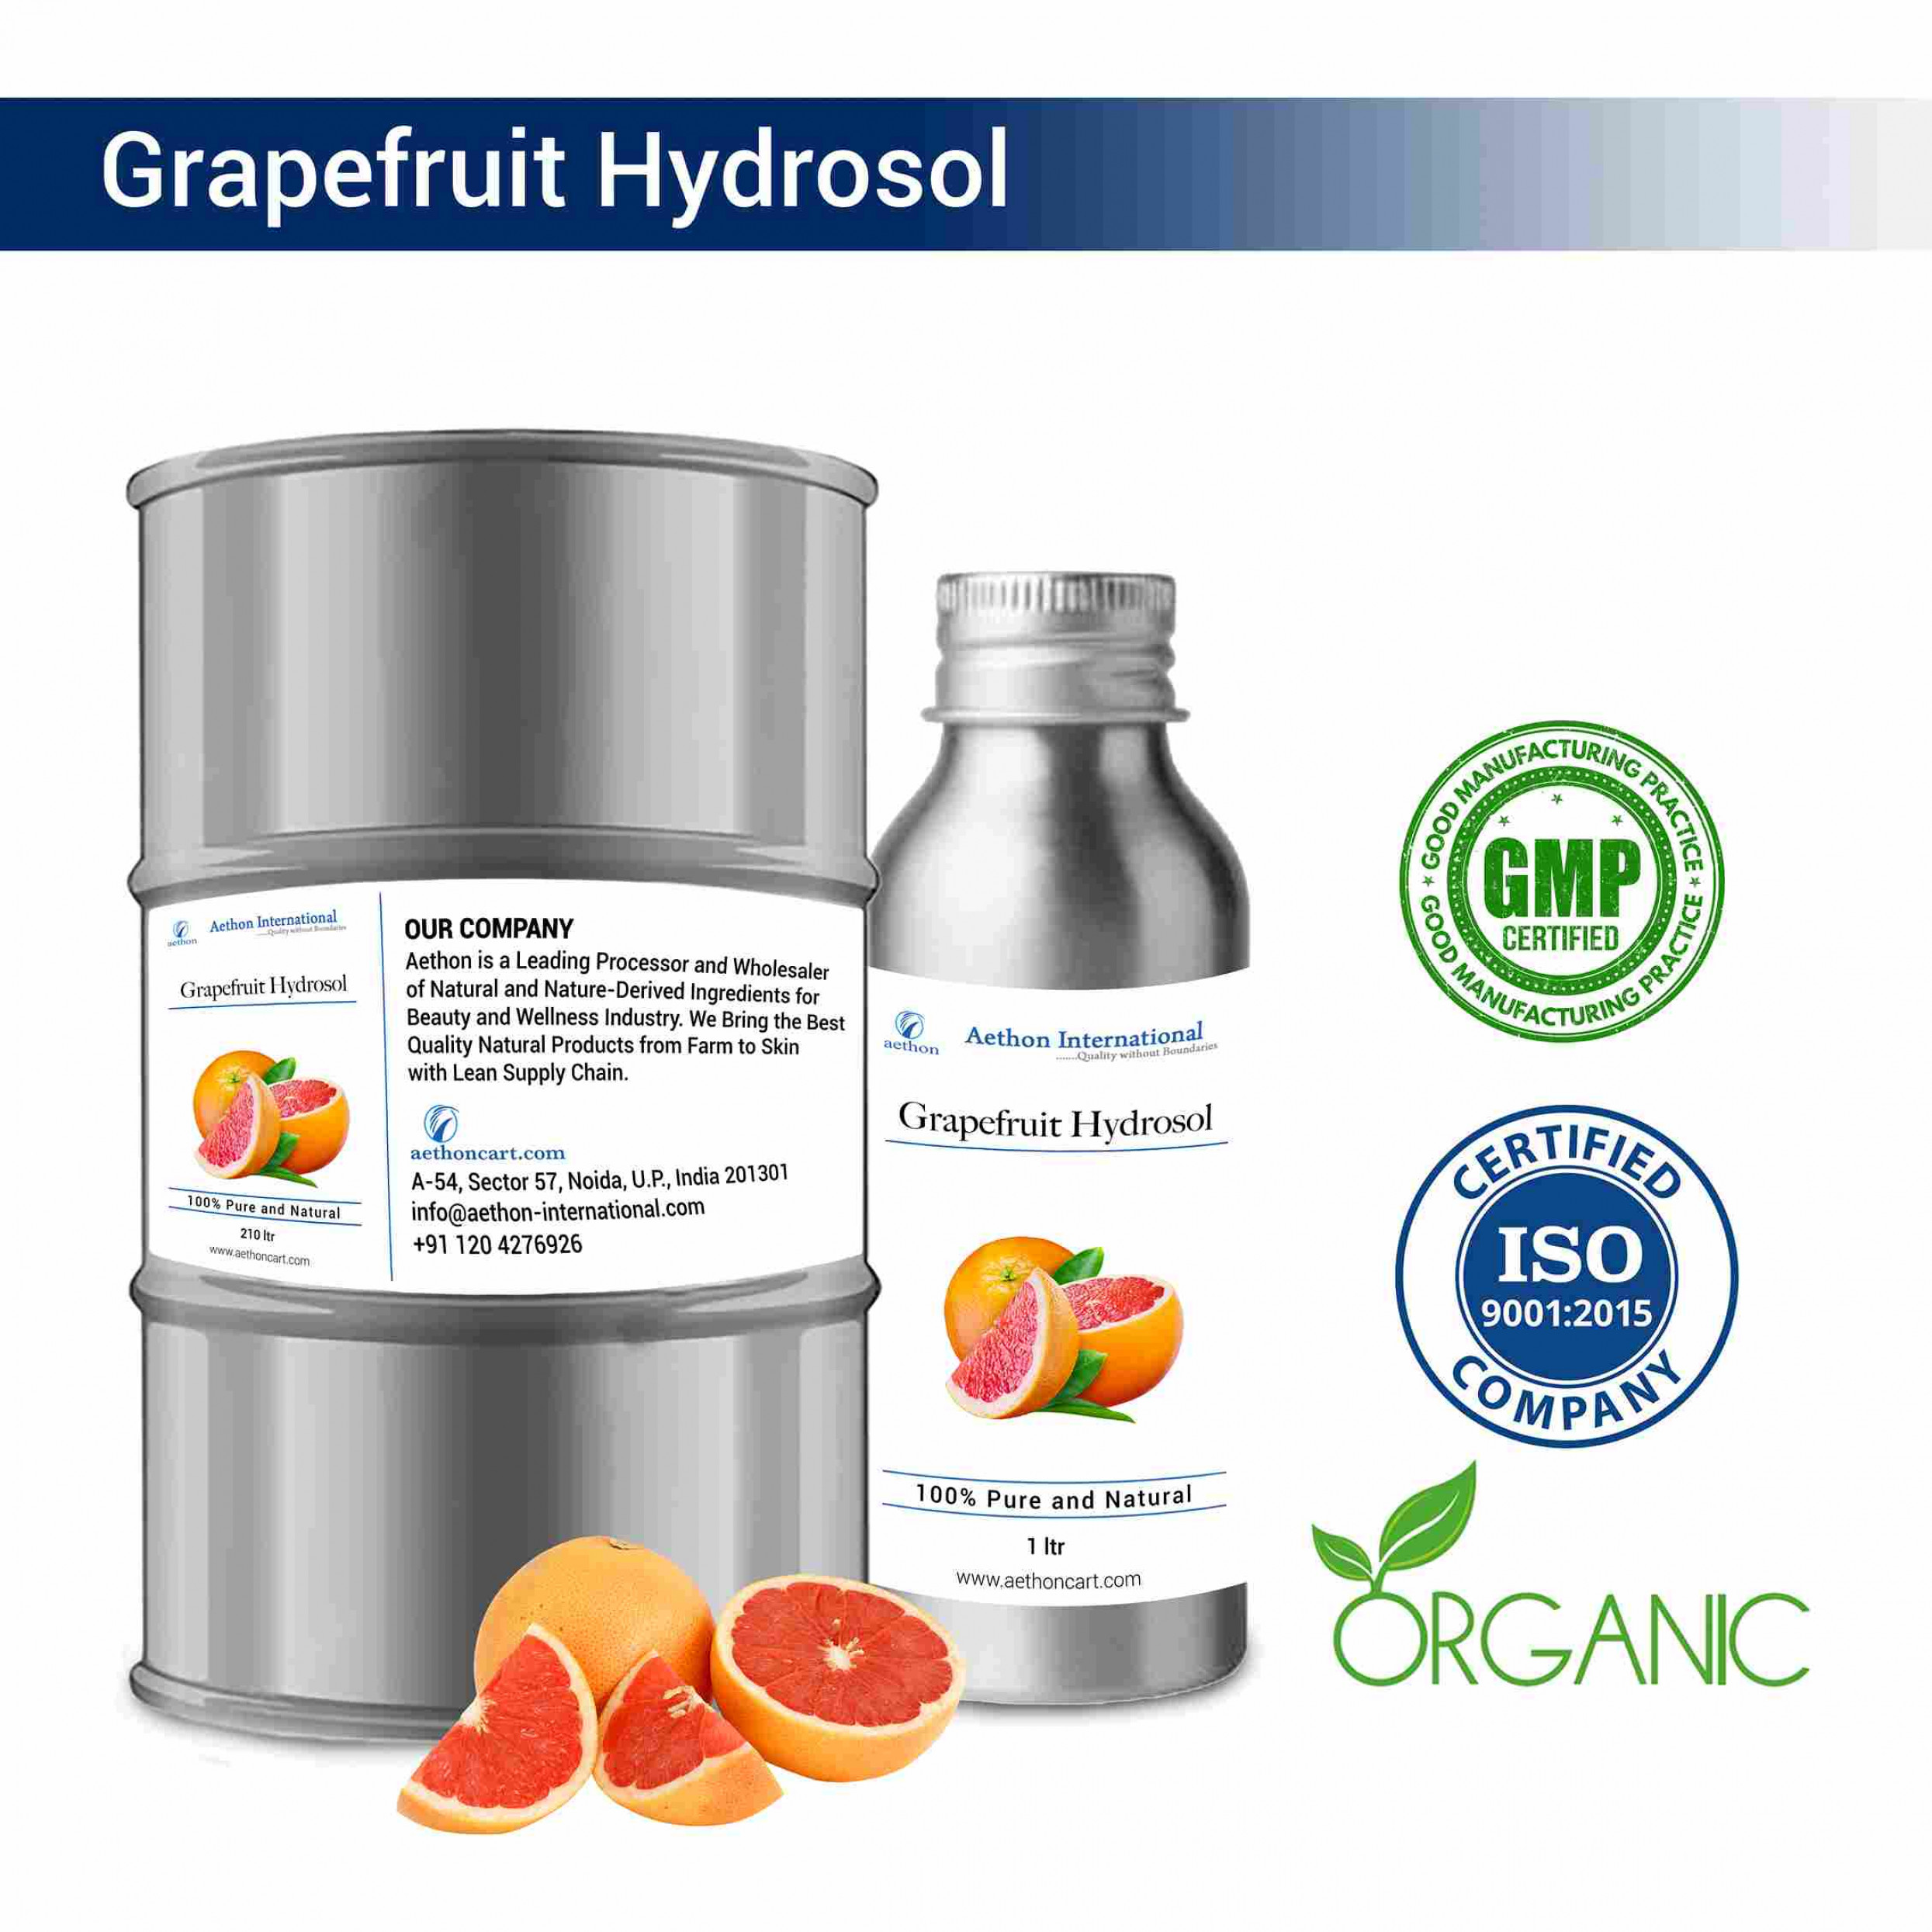 Grapefruit Hydrosol